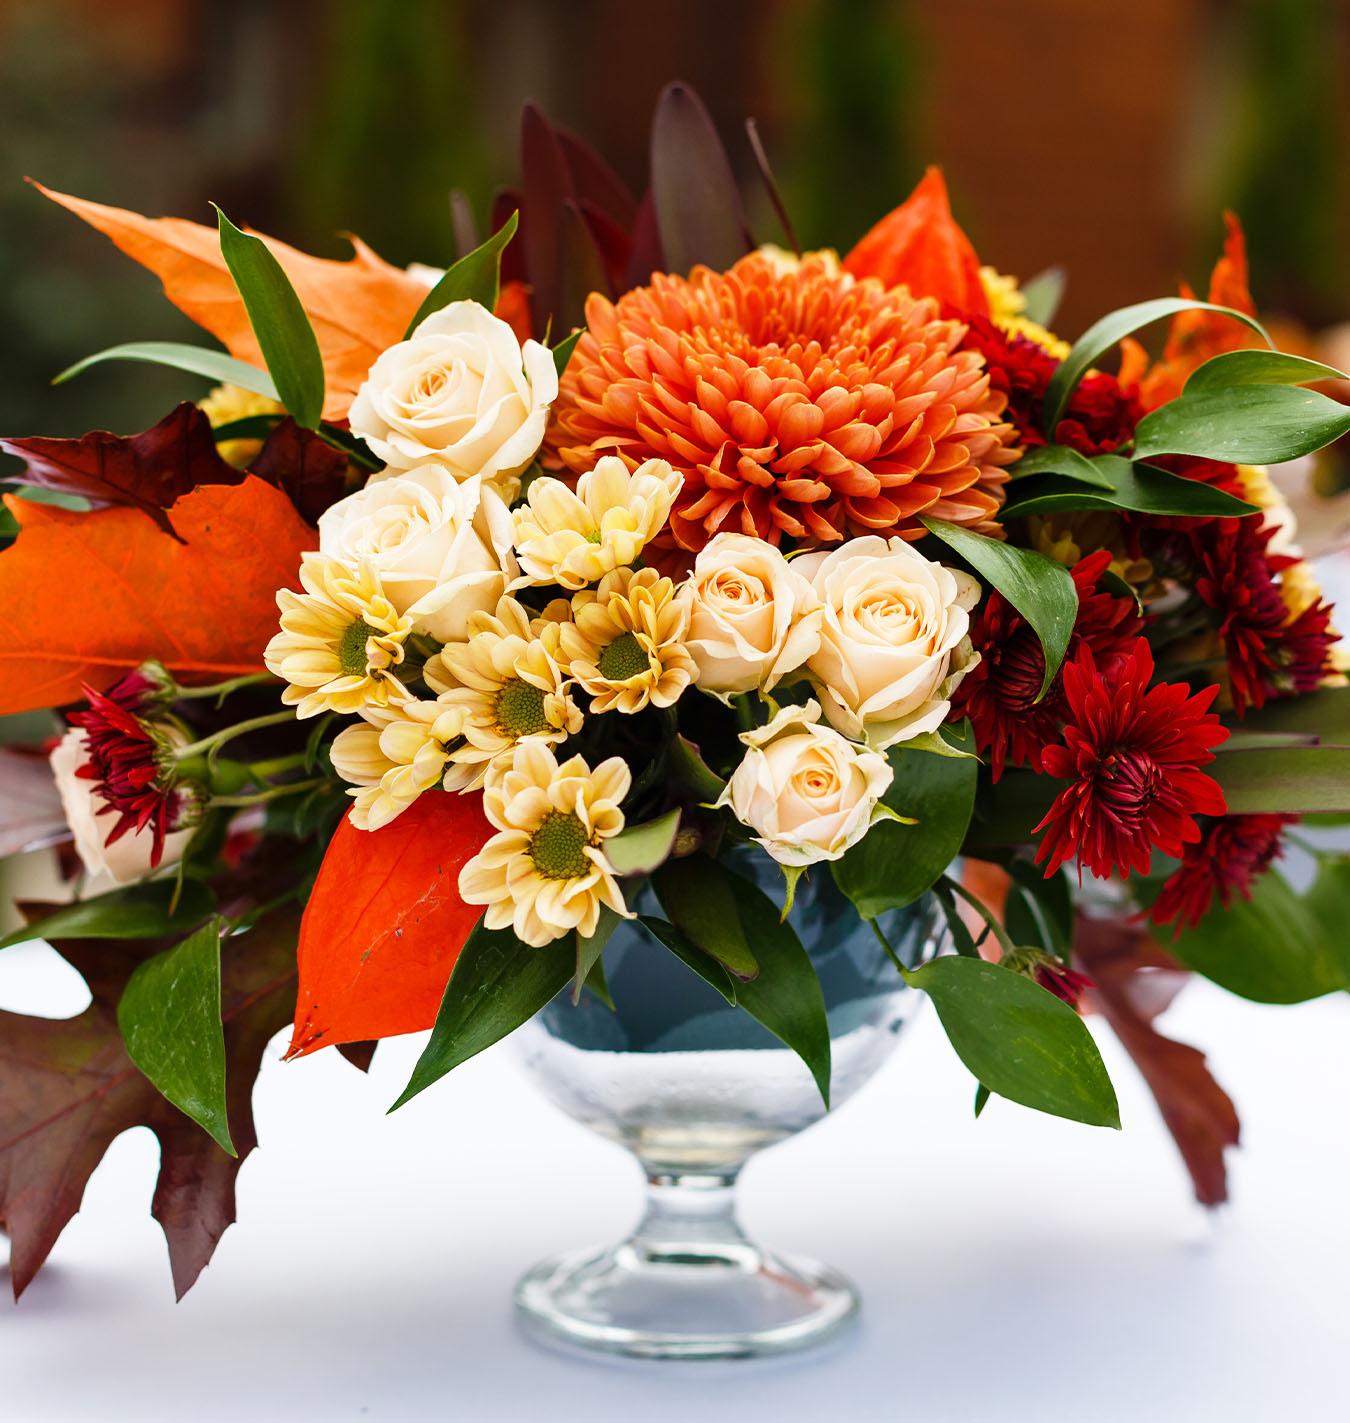 Salisbury at enjoy floral studio modern bouquet for thanksgiving